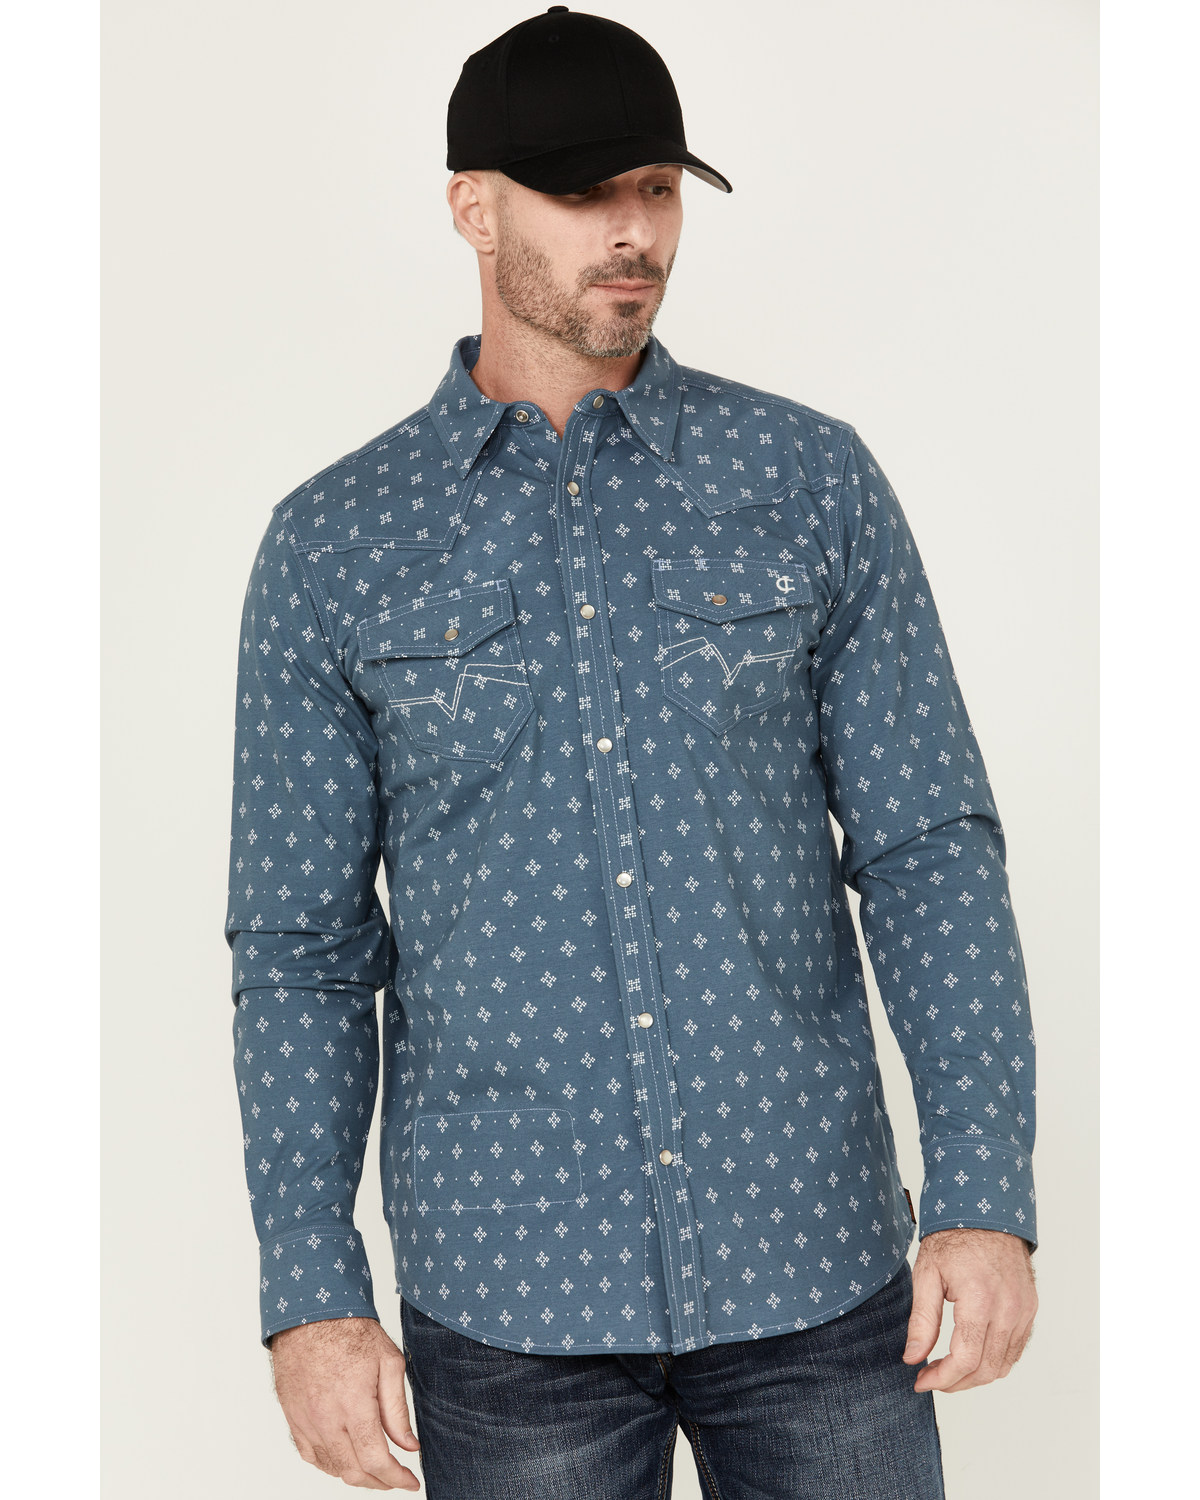 Cody James Men's FR Printed Lightweight Long Sleeve Snap Western Work Shirt